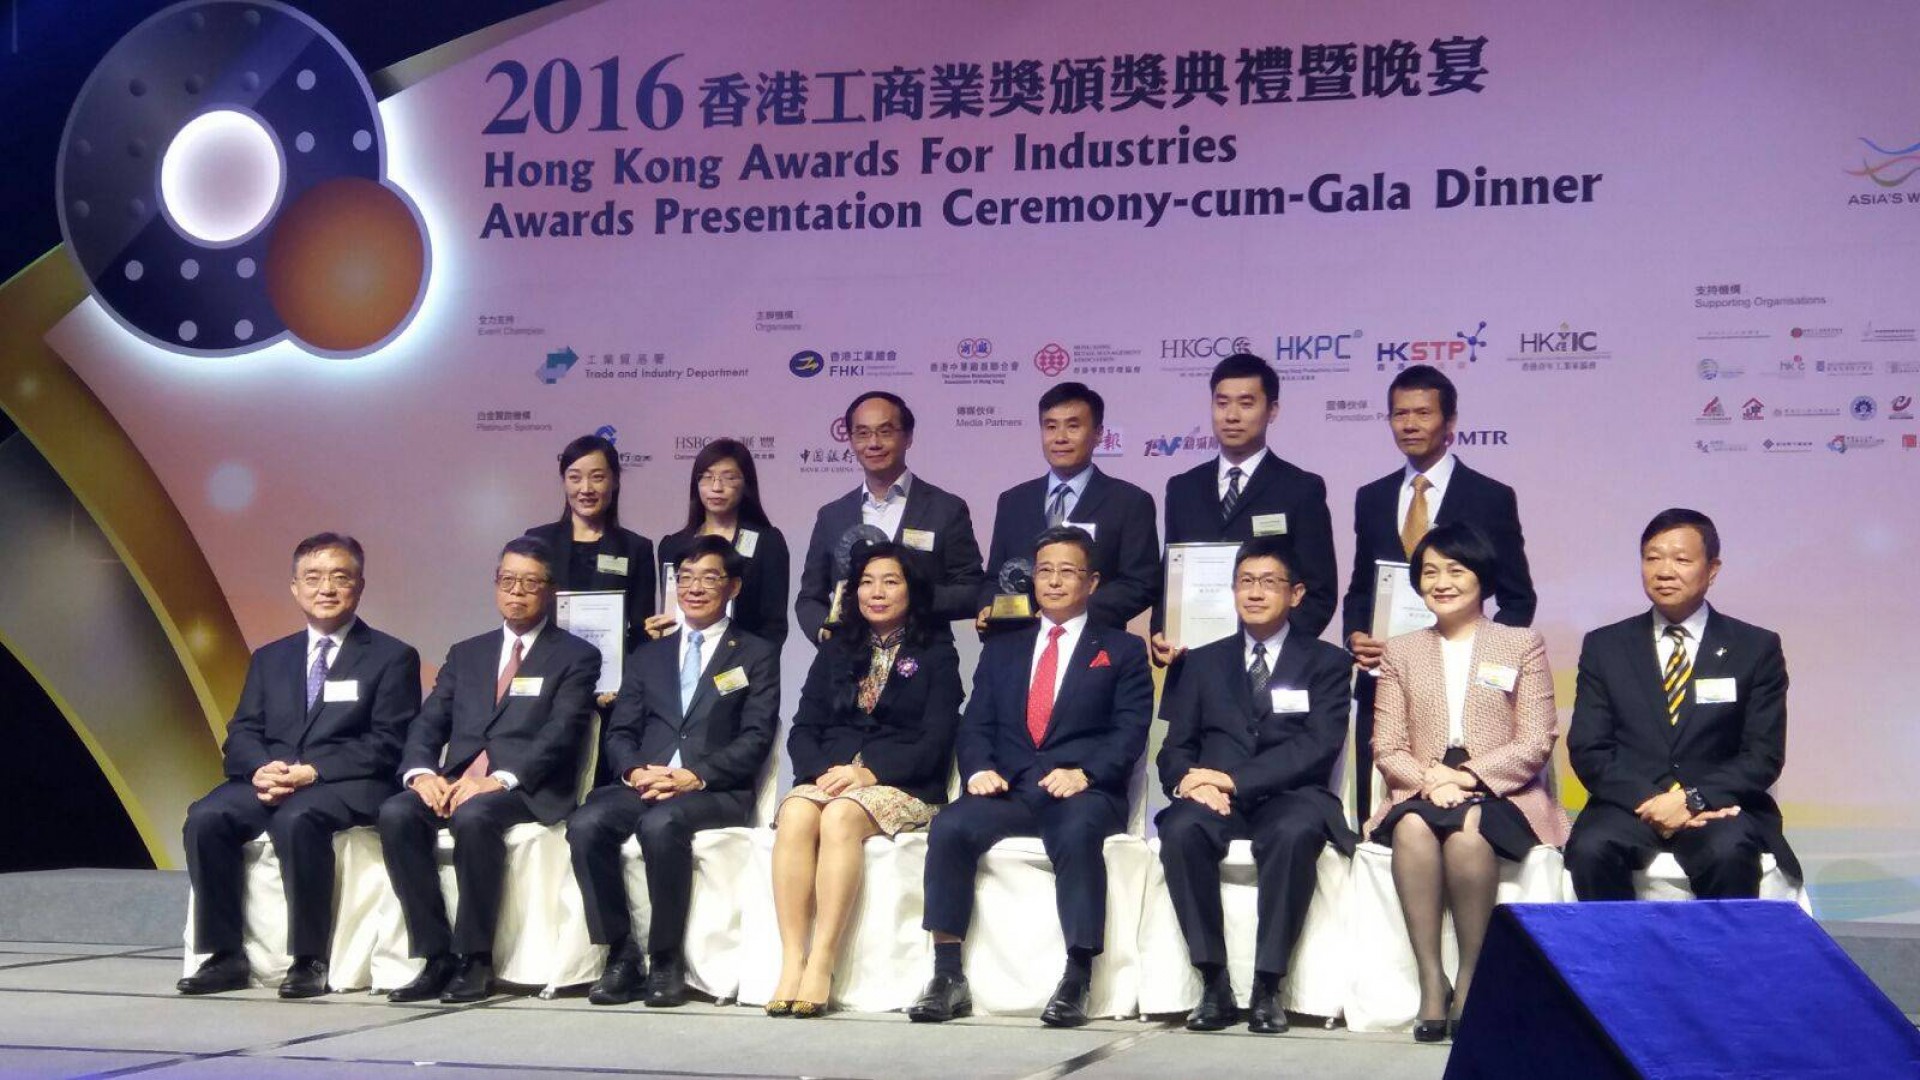 WEBBER 获得2016年香港工商业奖